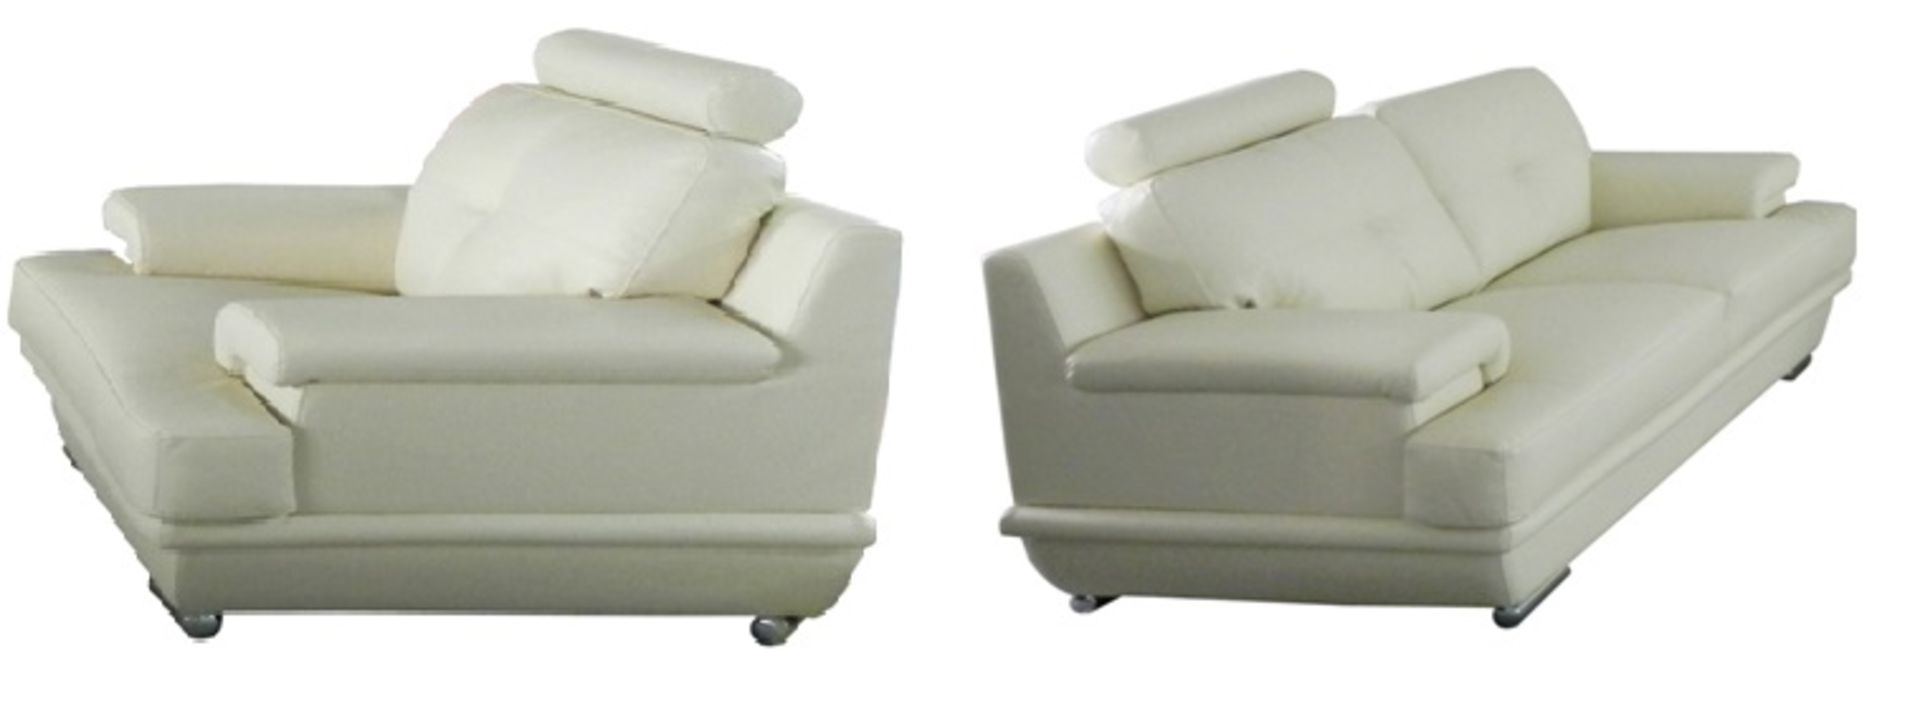 1 x Cream Bonded Leather Sofa 2 Seater - SFS006 (Brand New)